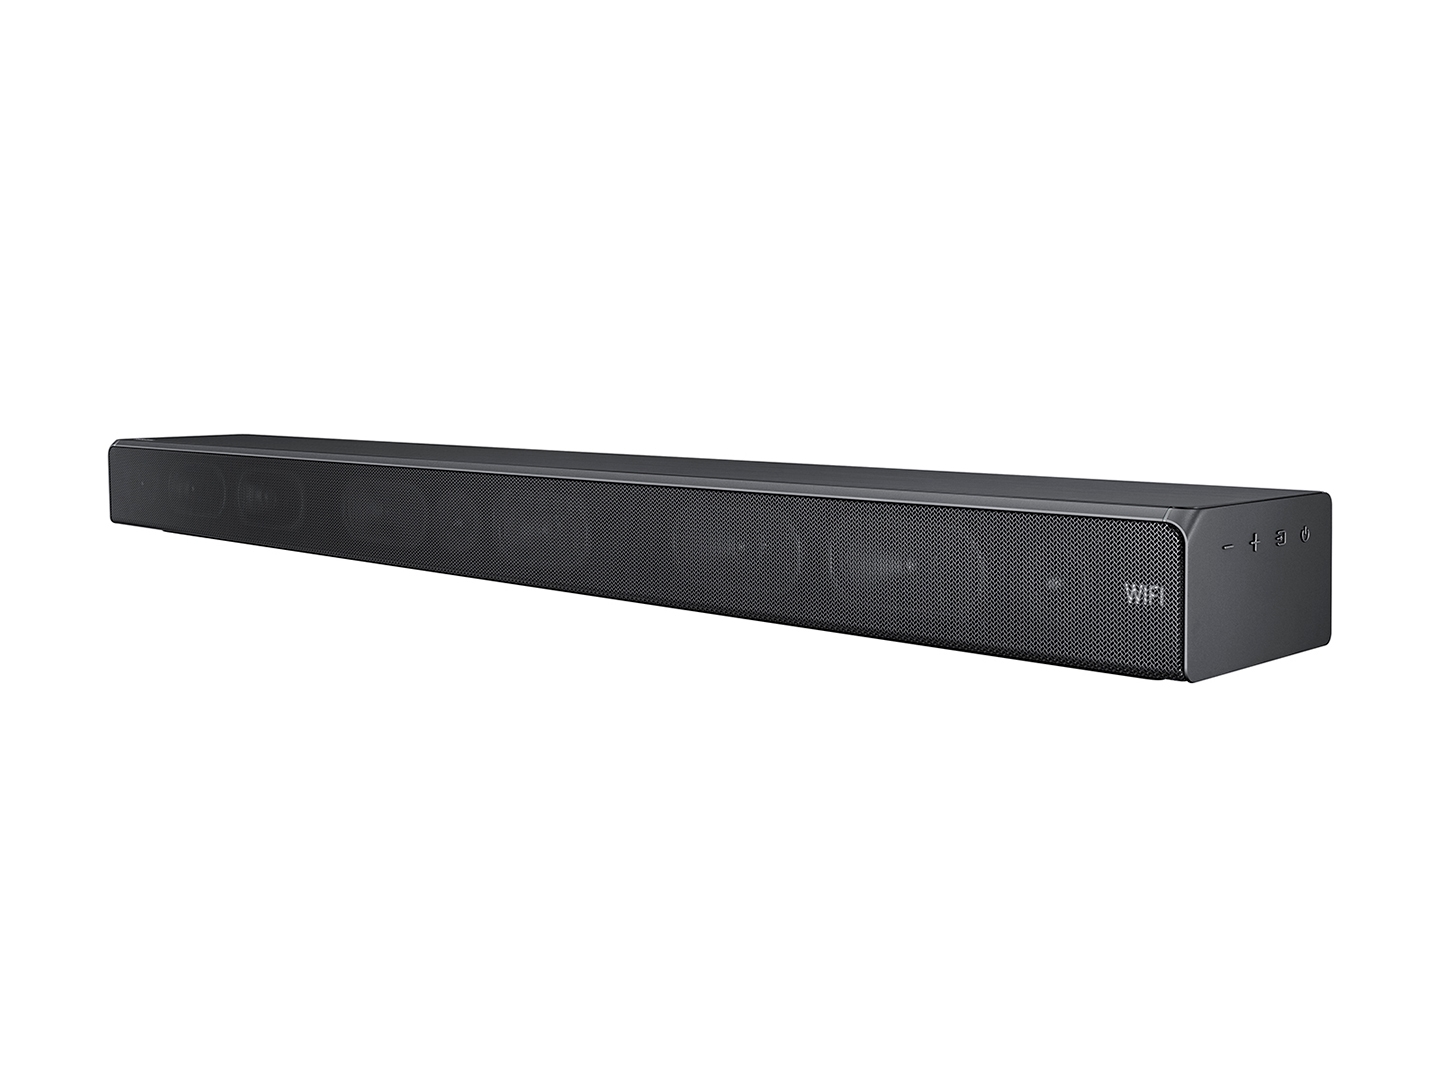 Premium Soundbar Home Theater - HW-MS650/ZA | US